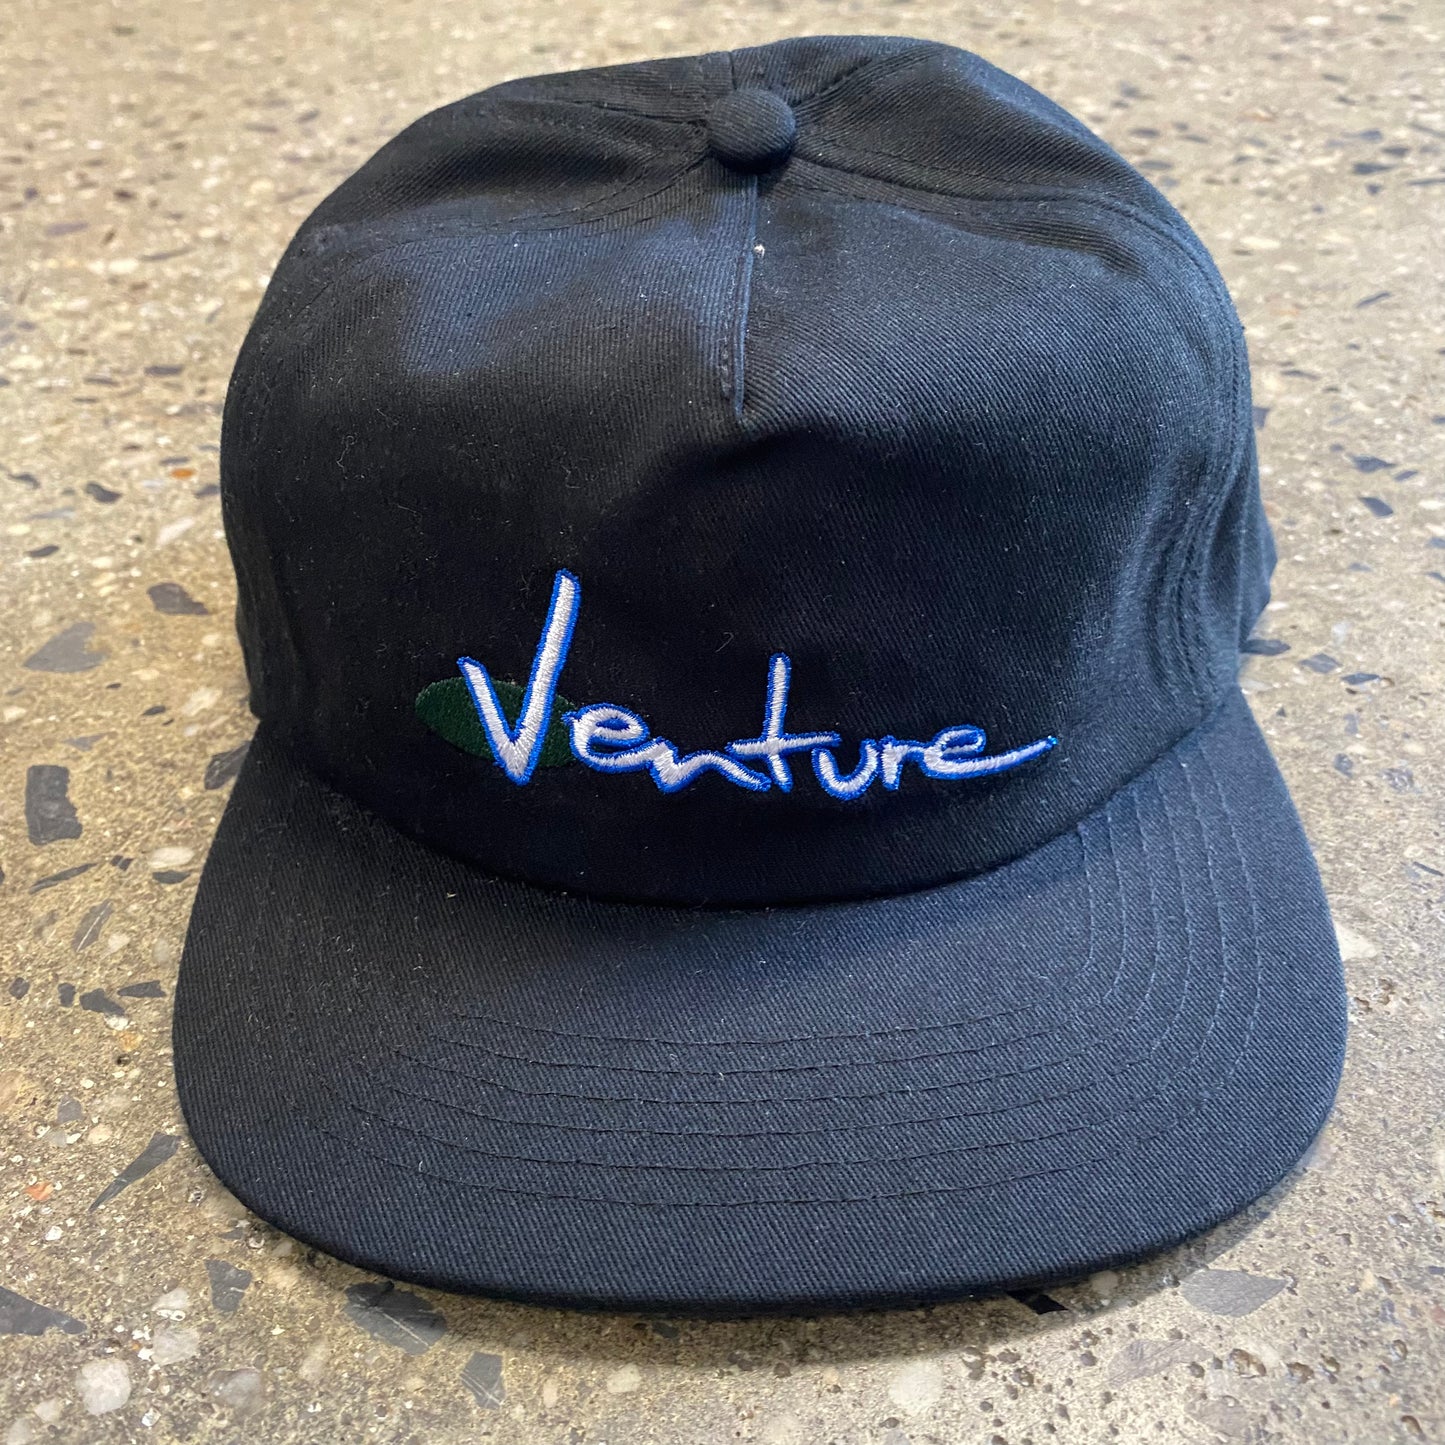 Venture 92' Snapback Hat - Black/White/Blue/Green